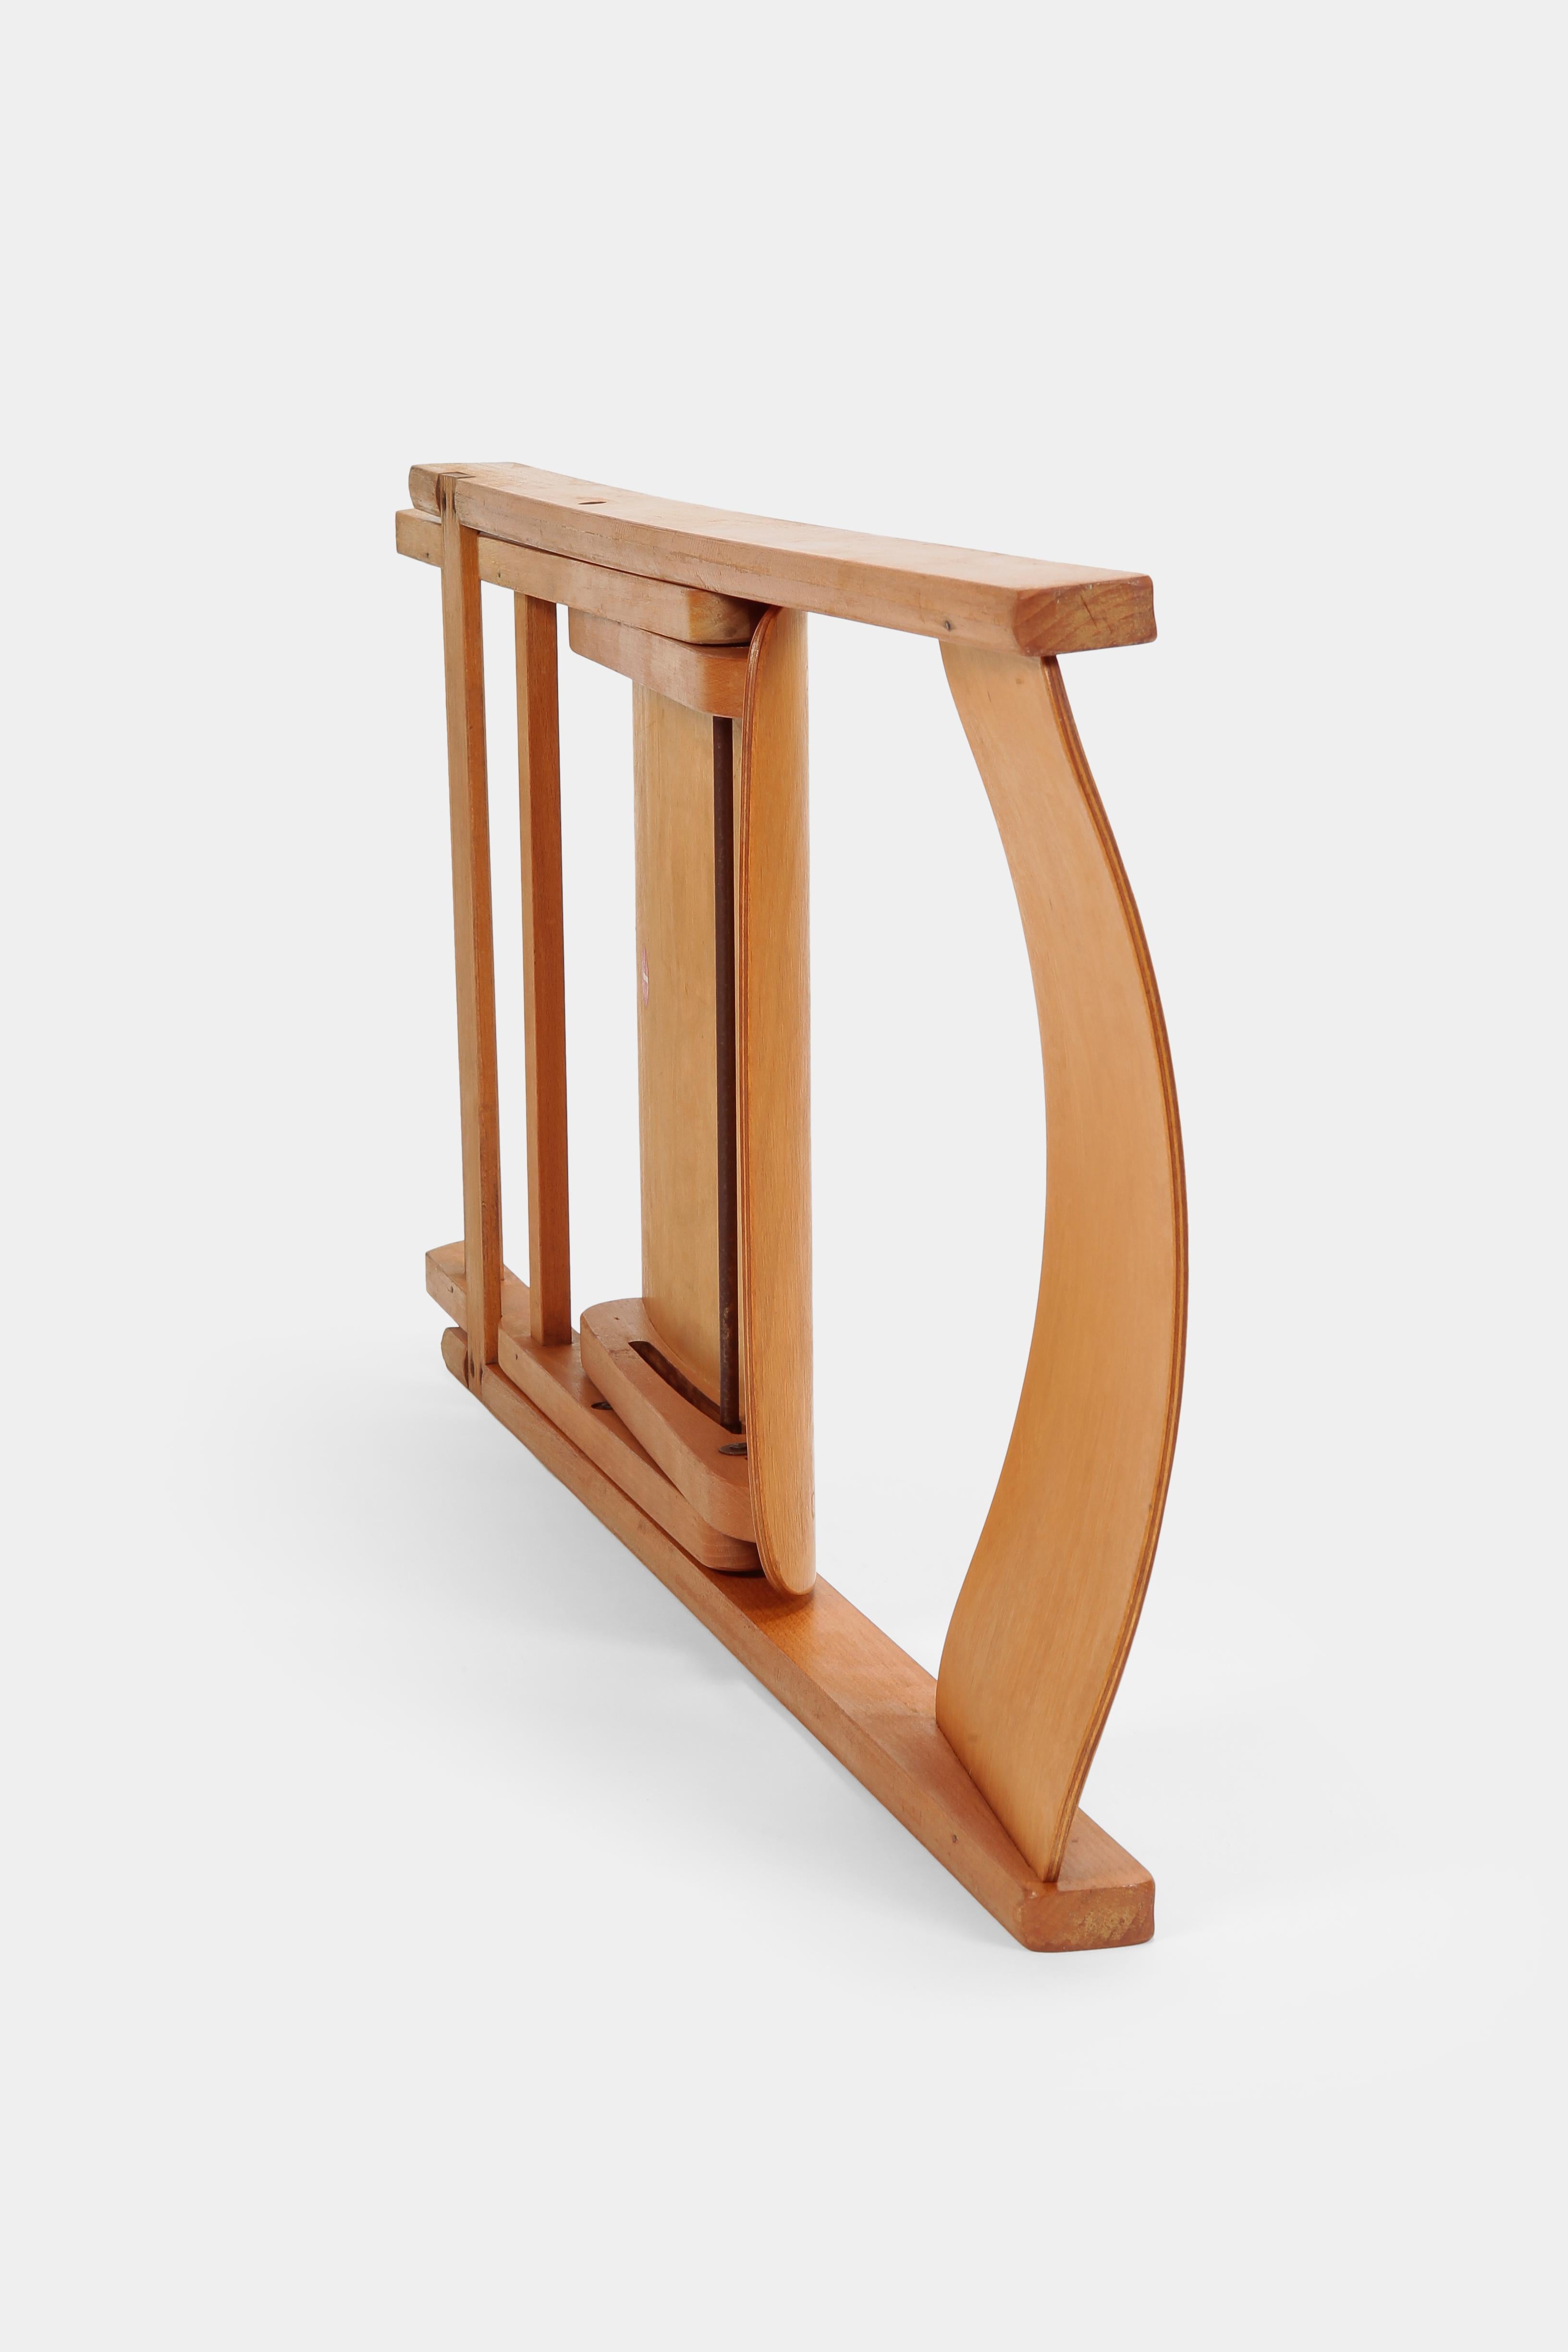 Swiss Midcentury Modern Birchwood Folding Chair, Wohnbedarf 1940s, Light Brown For Sale 1